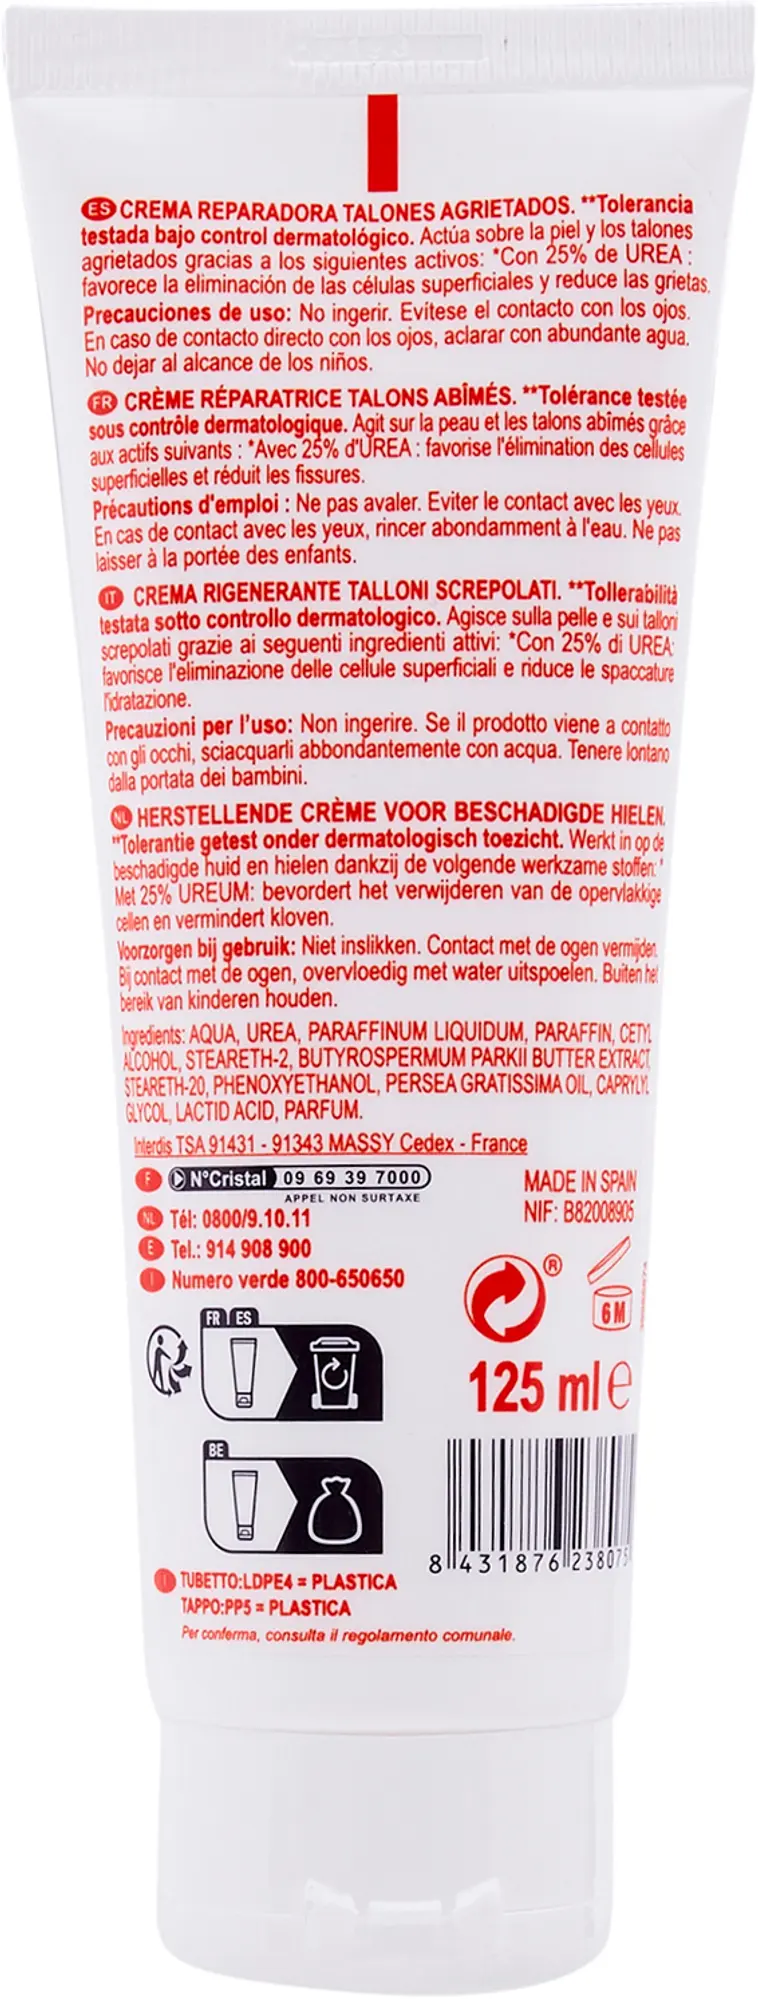 Carrefour Soft Repair Cream jalkavoide kantapäille 125 ml - 2